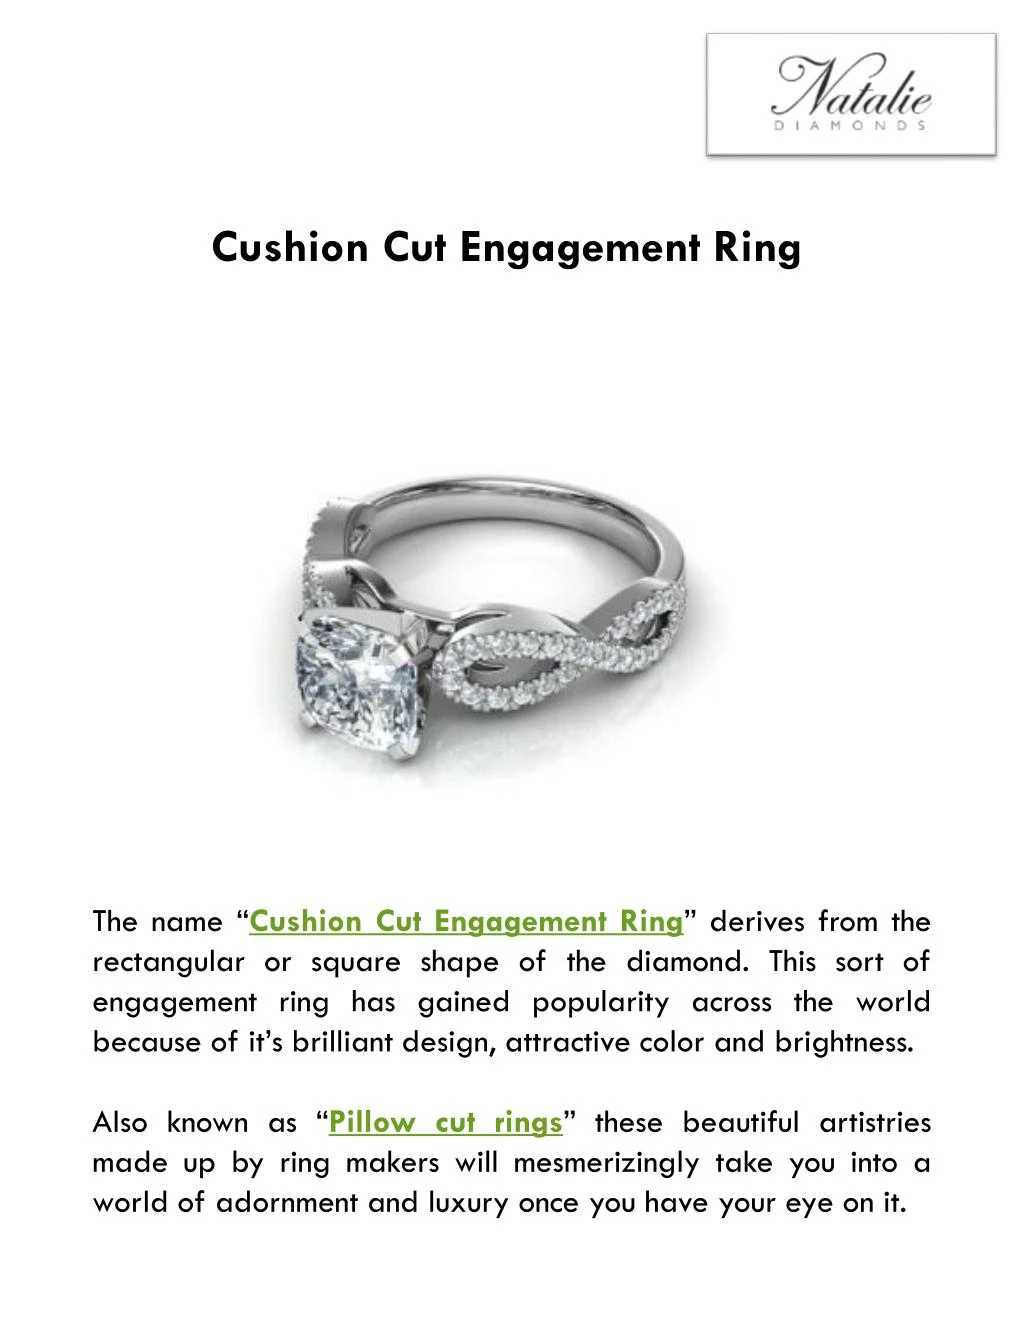 cushion cut engagement ring